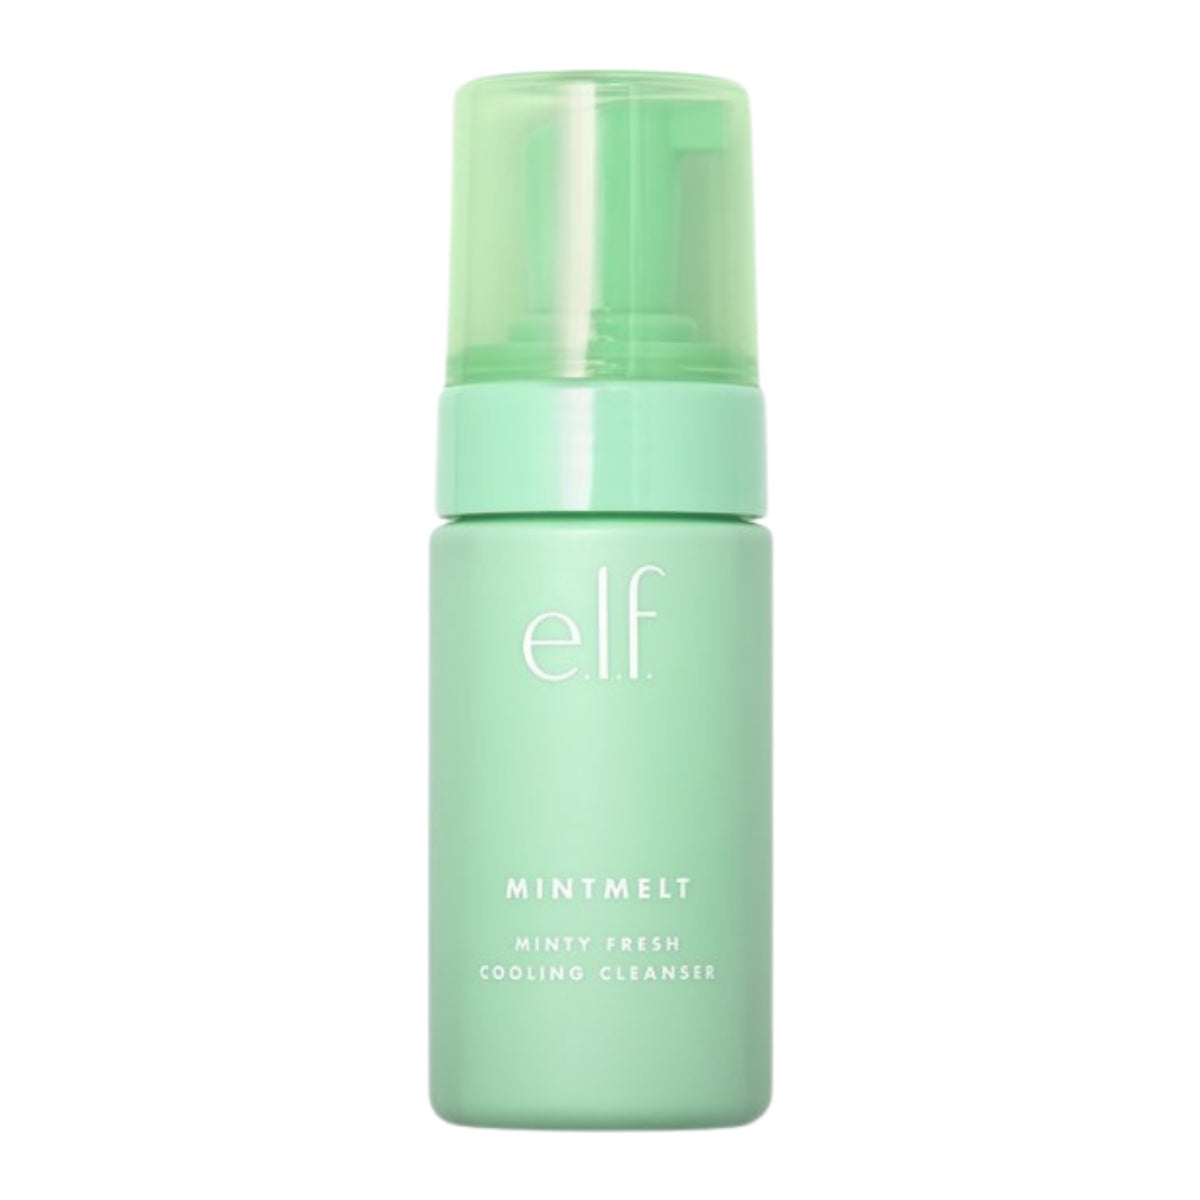 e.l.f. Mint melt Cooling Facial Cleanser 100 ml